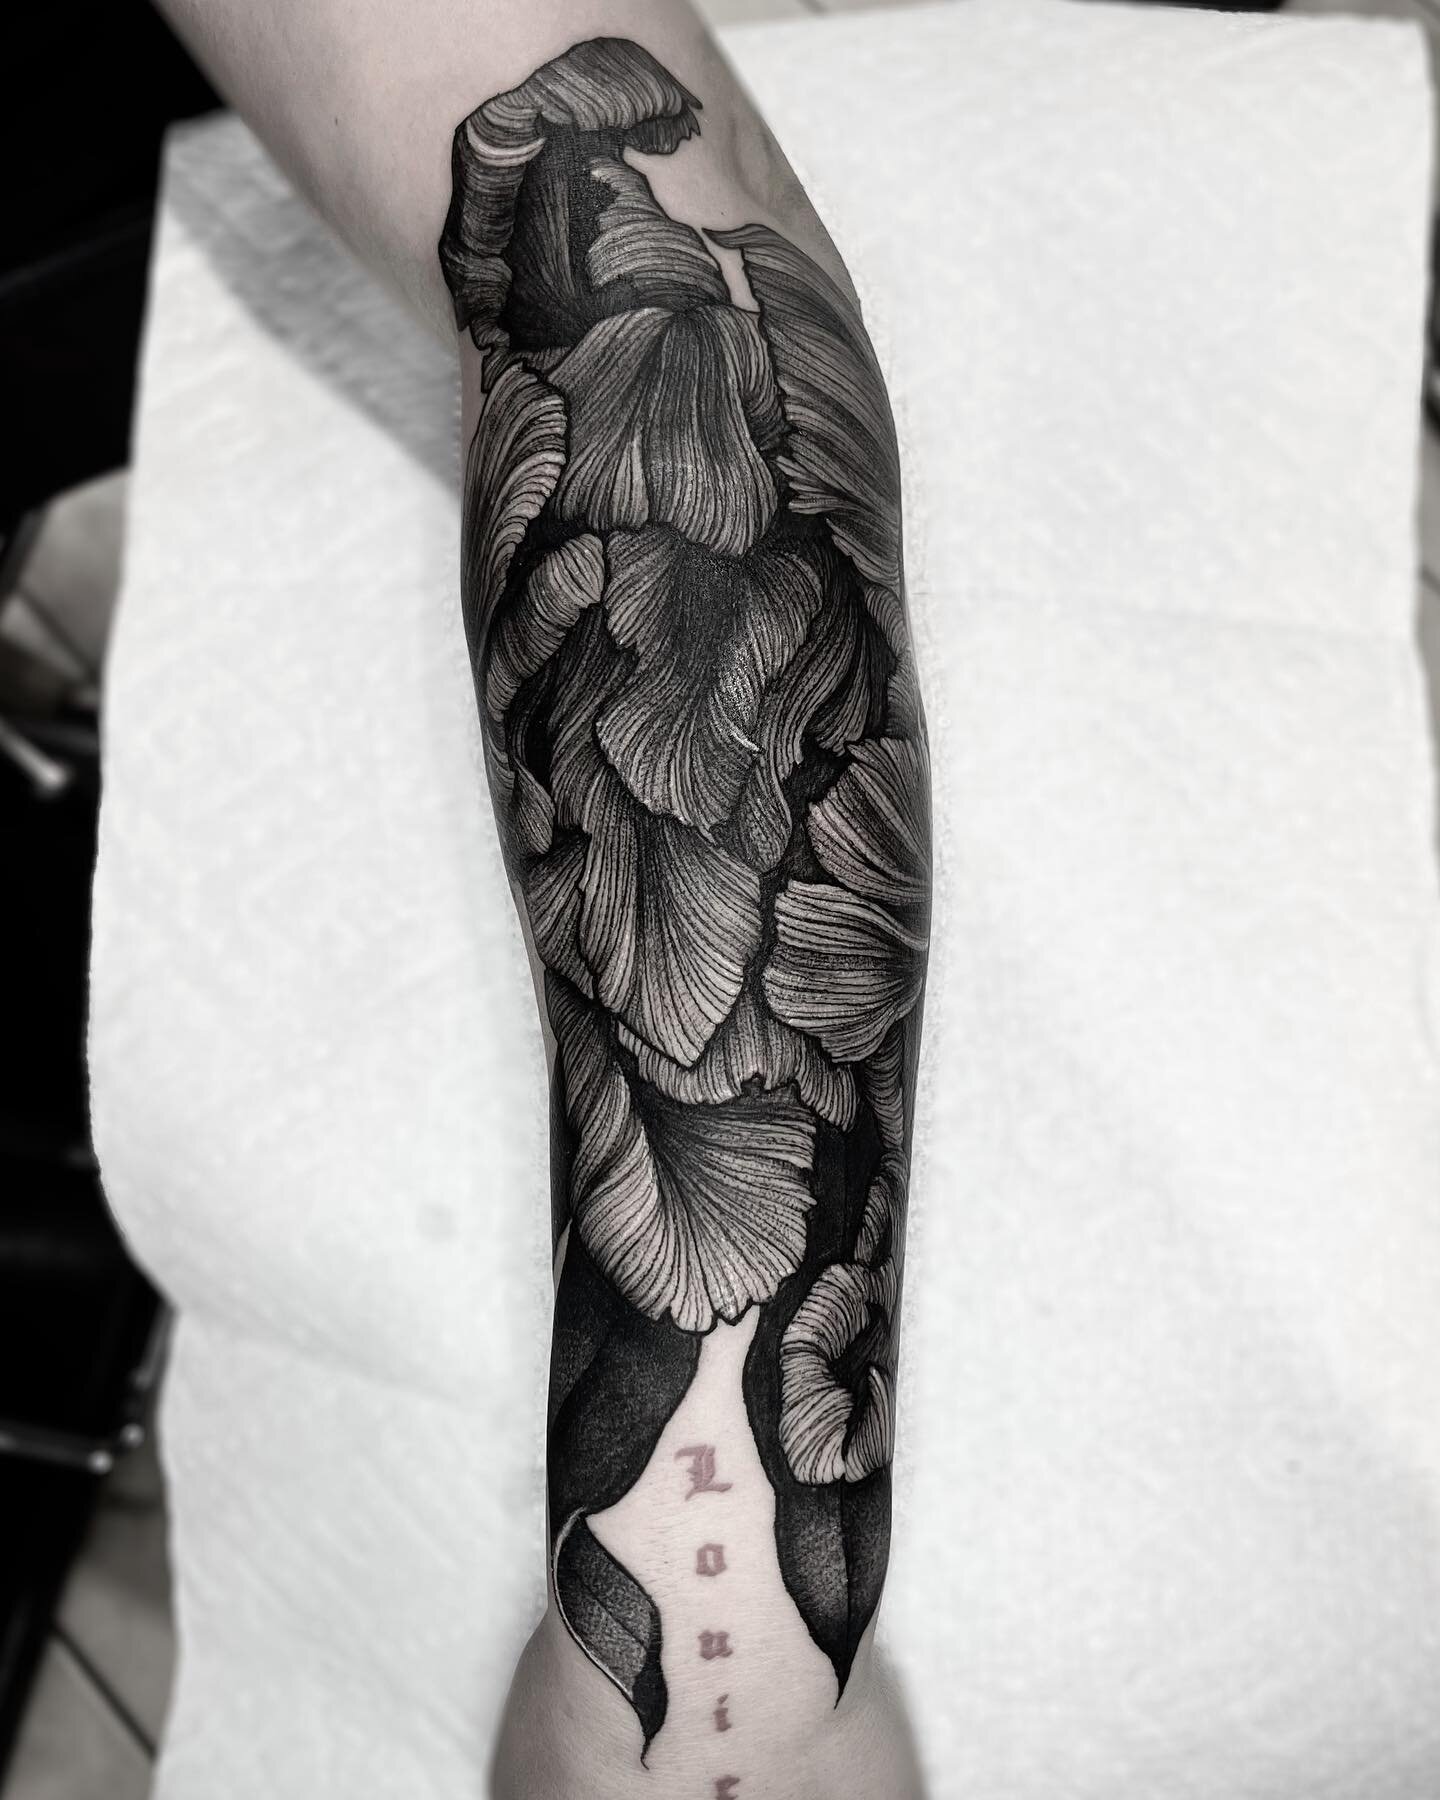 Parrot tulip 🌷 Can&rsquo;t wait to continue this project! 🖤
✖️ Done at @sharktooth_tattoo ✖️
.
.
.
.
@industryinks
@hivecaps 
@empireinks 
@goodguysupply 
.
.
.
.
.
.
.
.
.
.
.
.
.
.
#tattoo #tattoos #tattooartist #tattooed #tattooist #blackworkers